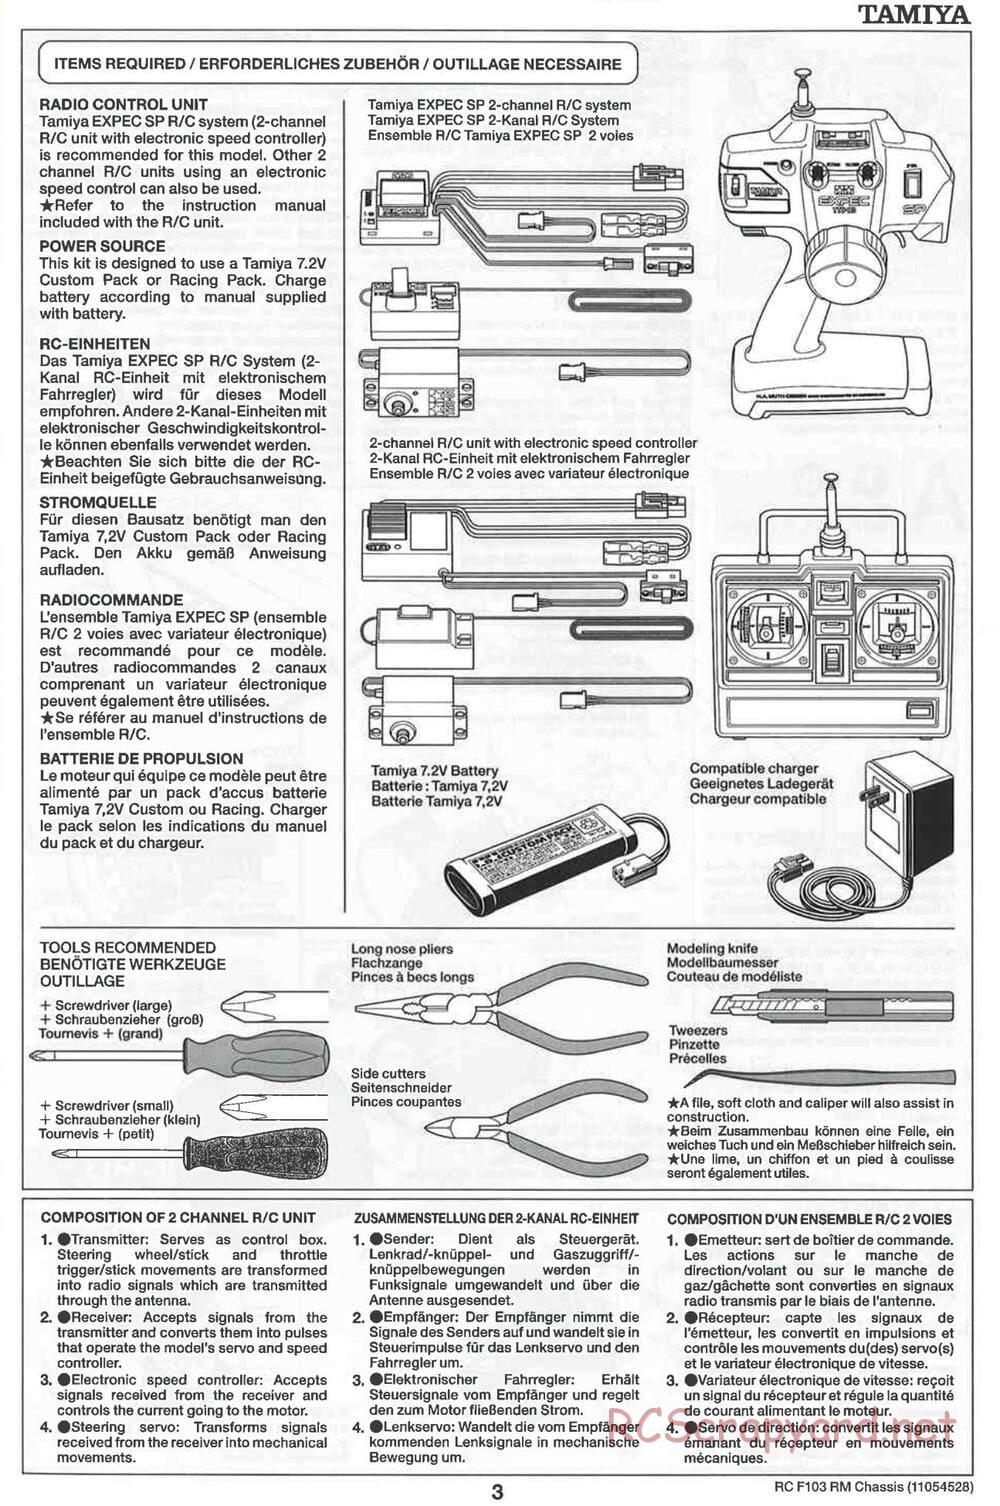 Tamiya - F103RM Chassis - Manual - Page 3